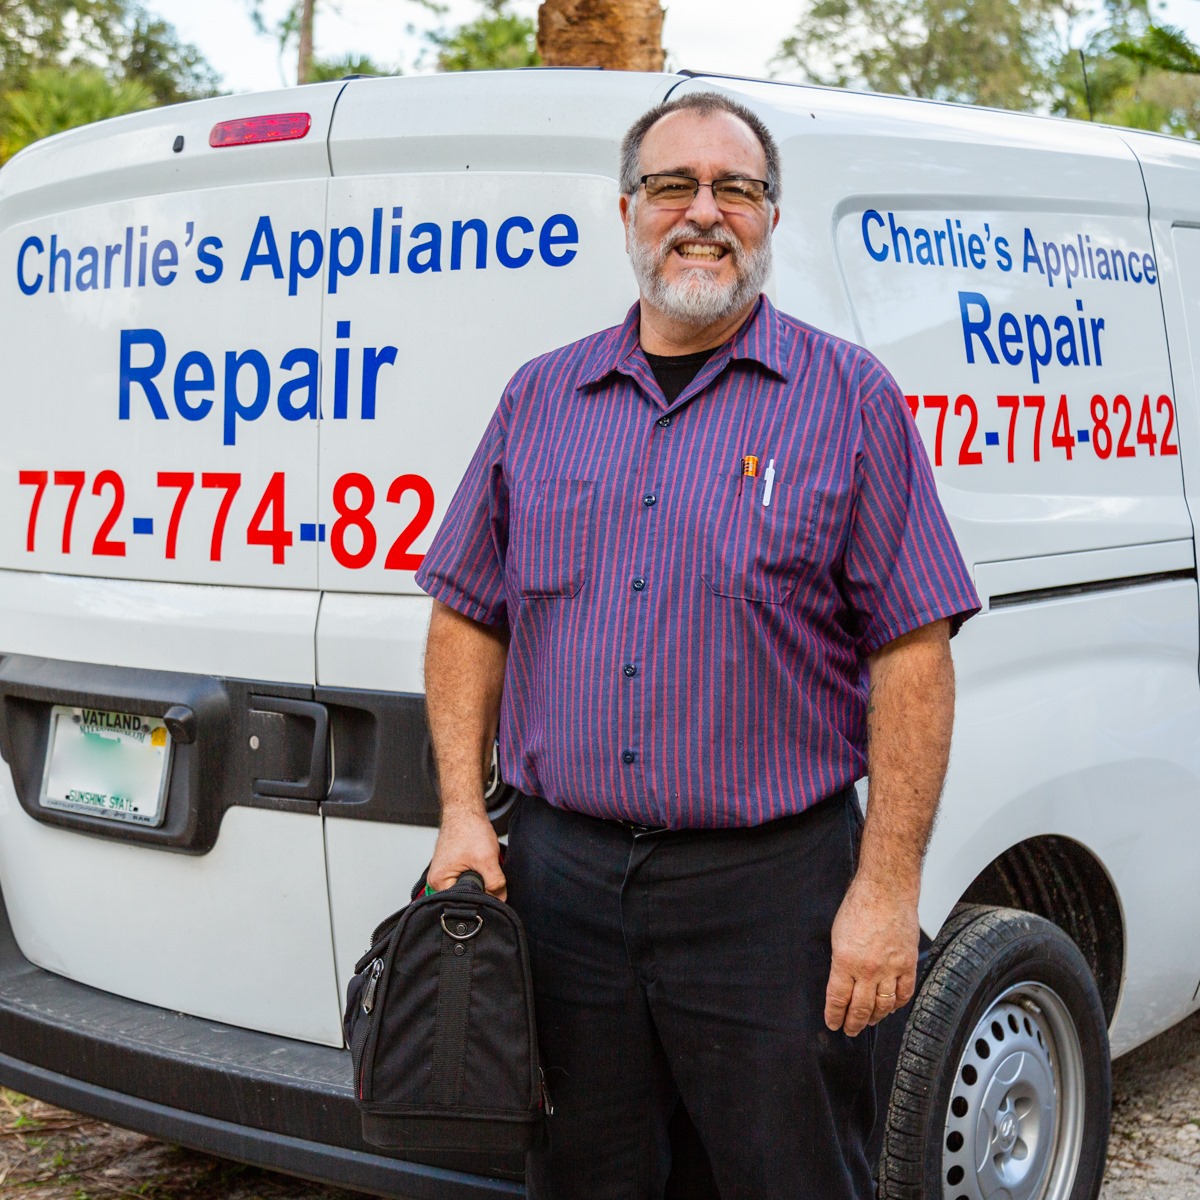 Charlie's appliance repair